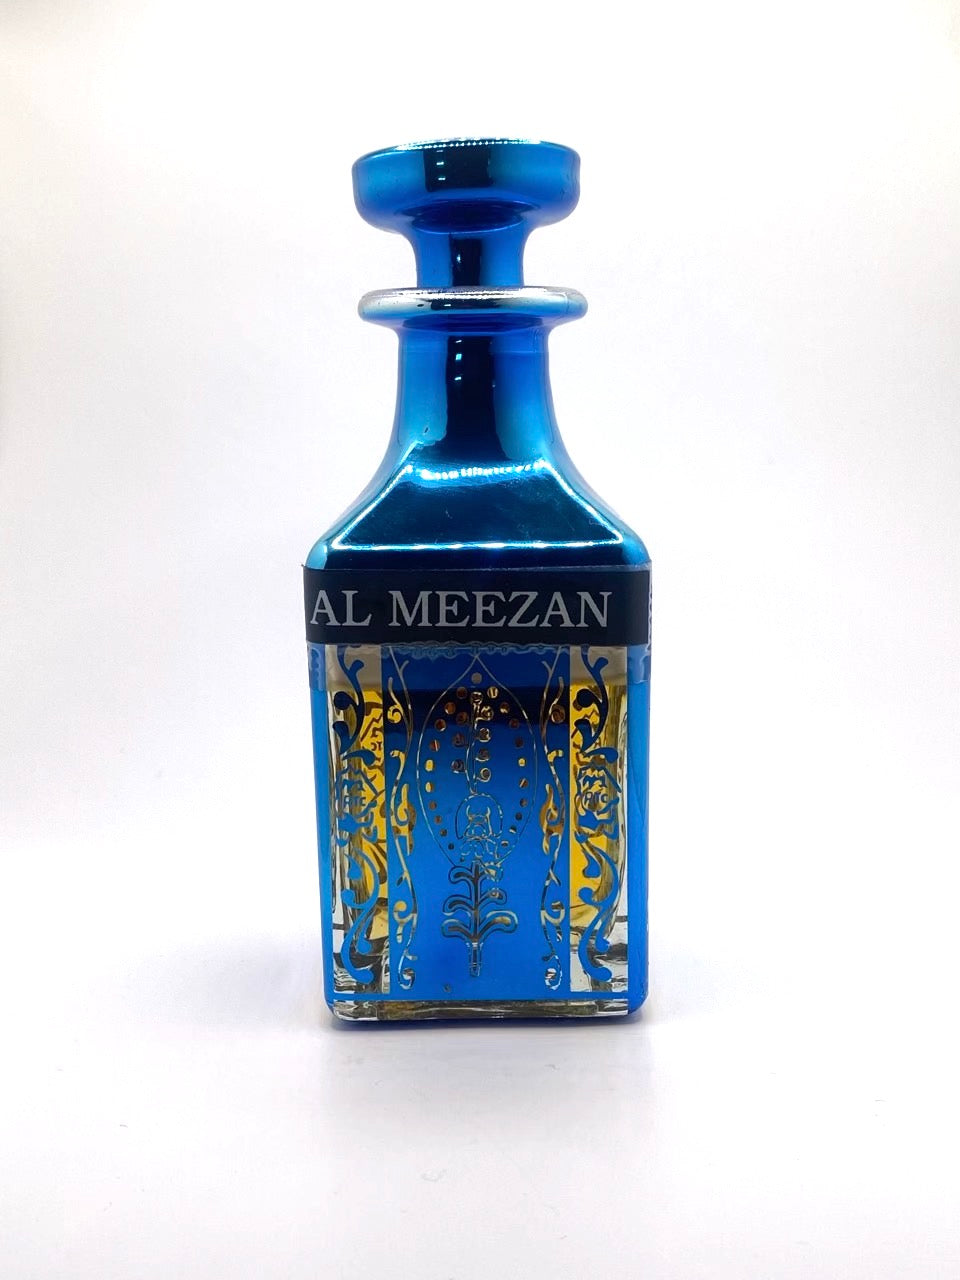 Al Meezan